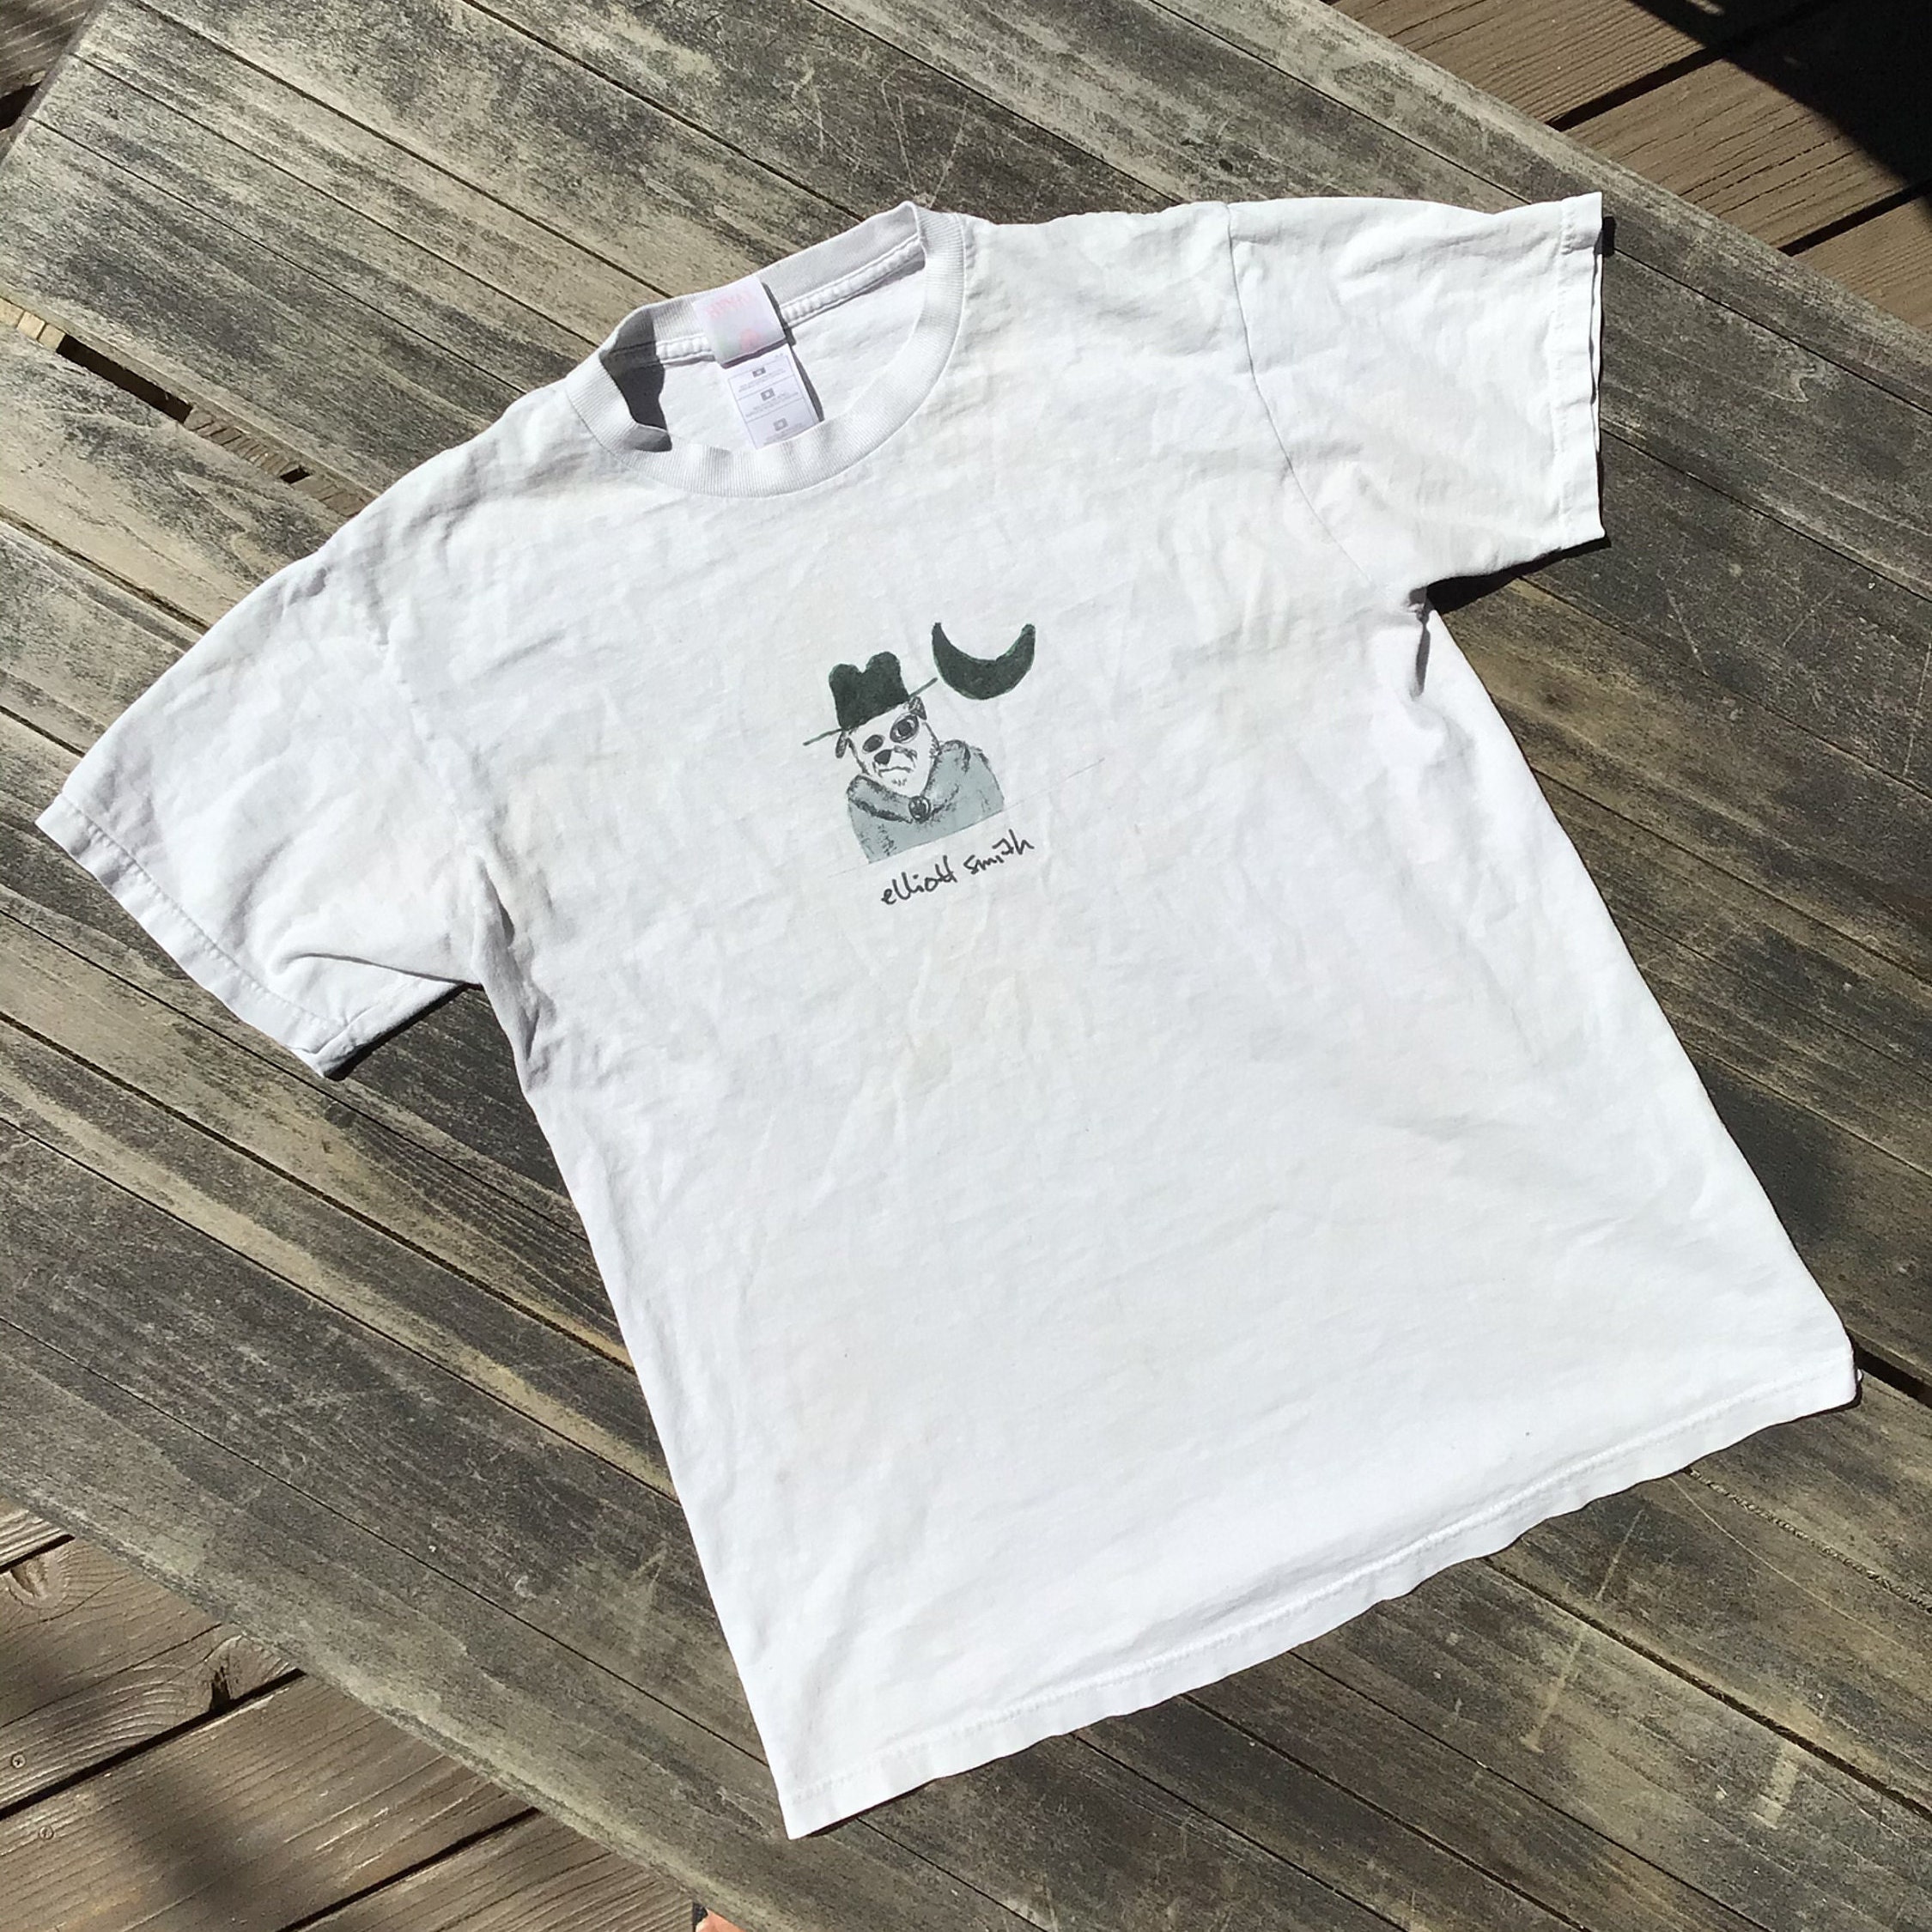 Kleding Unisex kinderkleding Unisex babykleding Tops Elliott Smith figuur 8 organisch T-shirt voor kinderen 